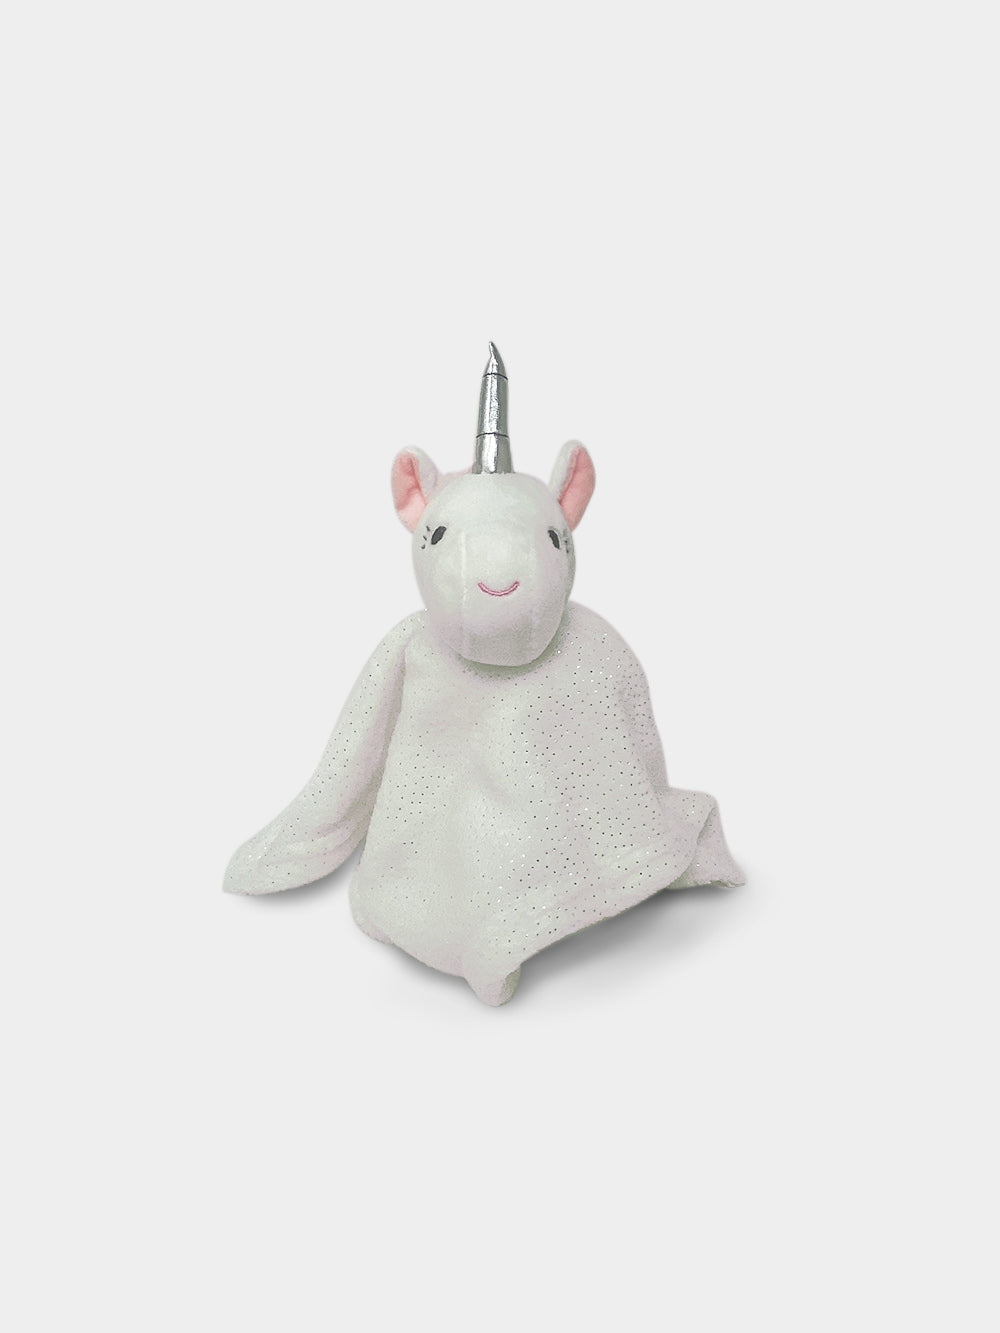 White, sparkly unicorn rattle comforter